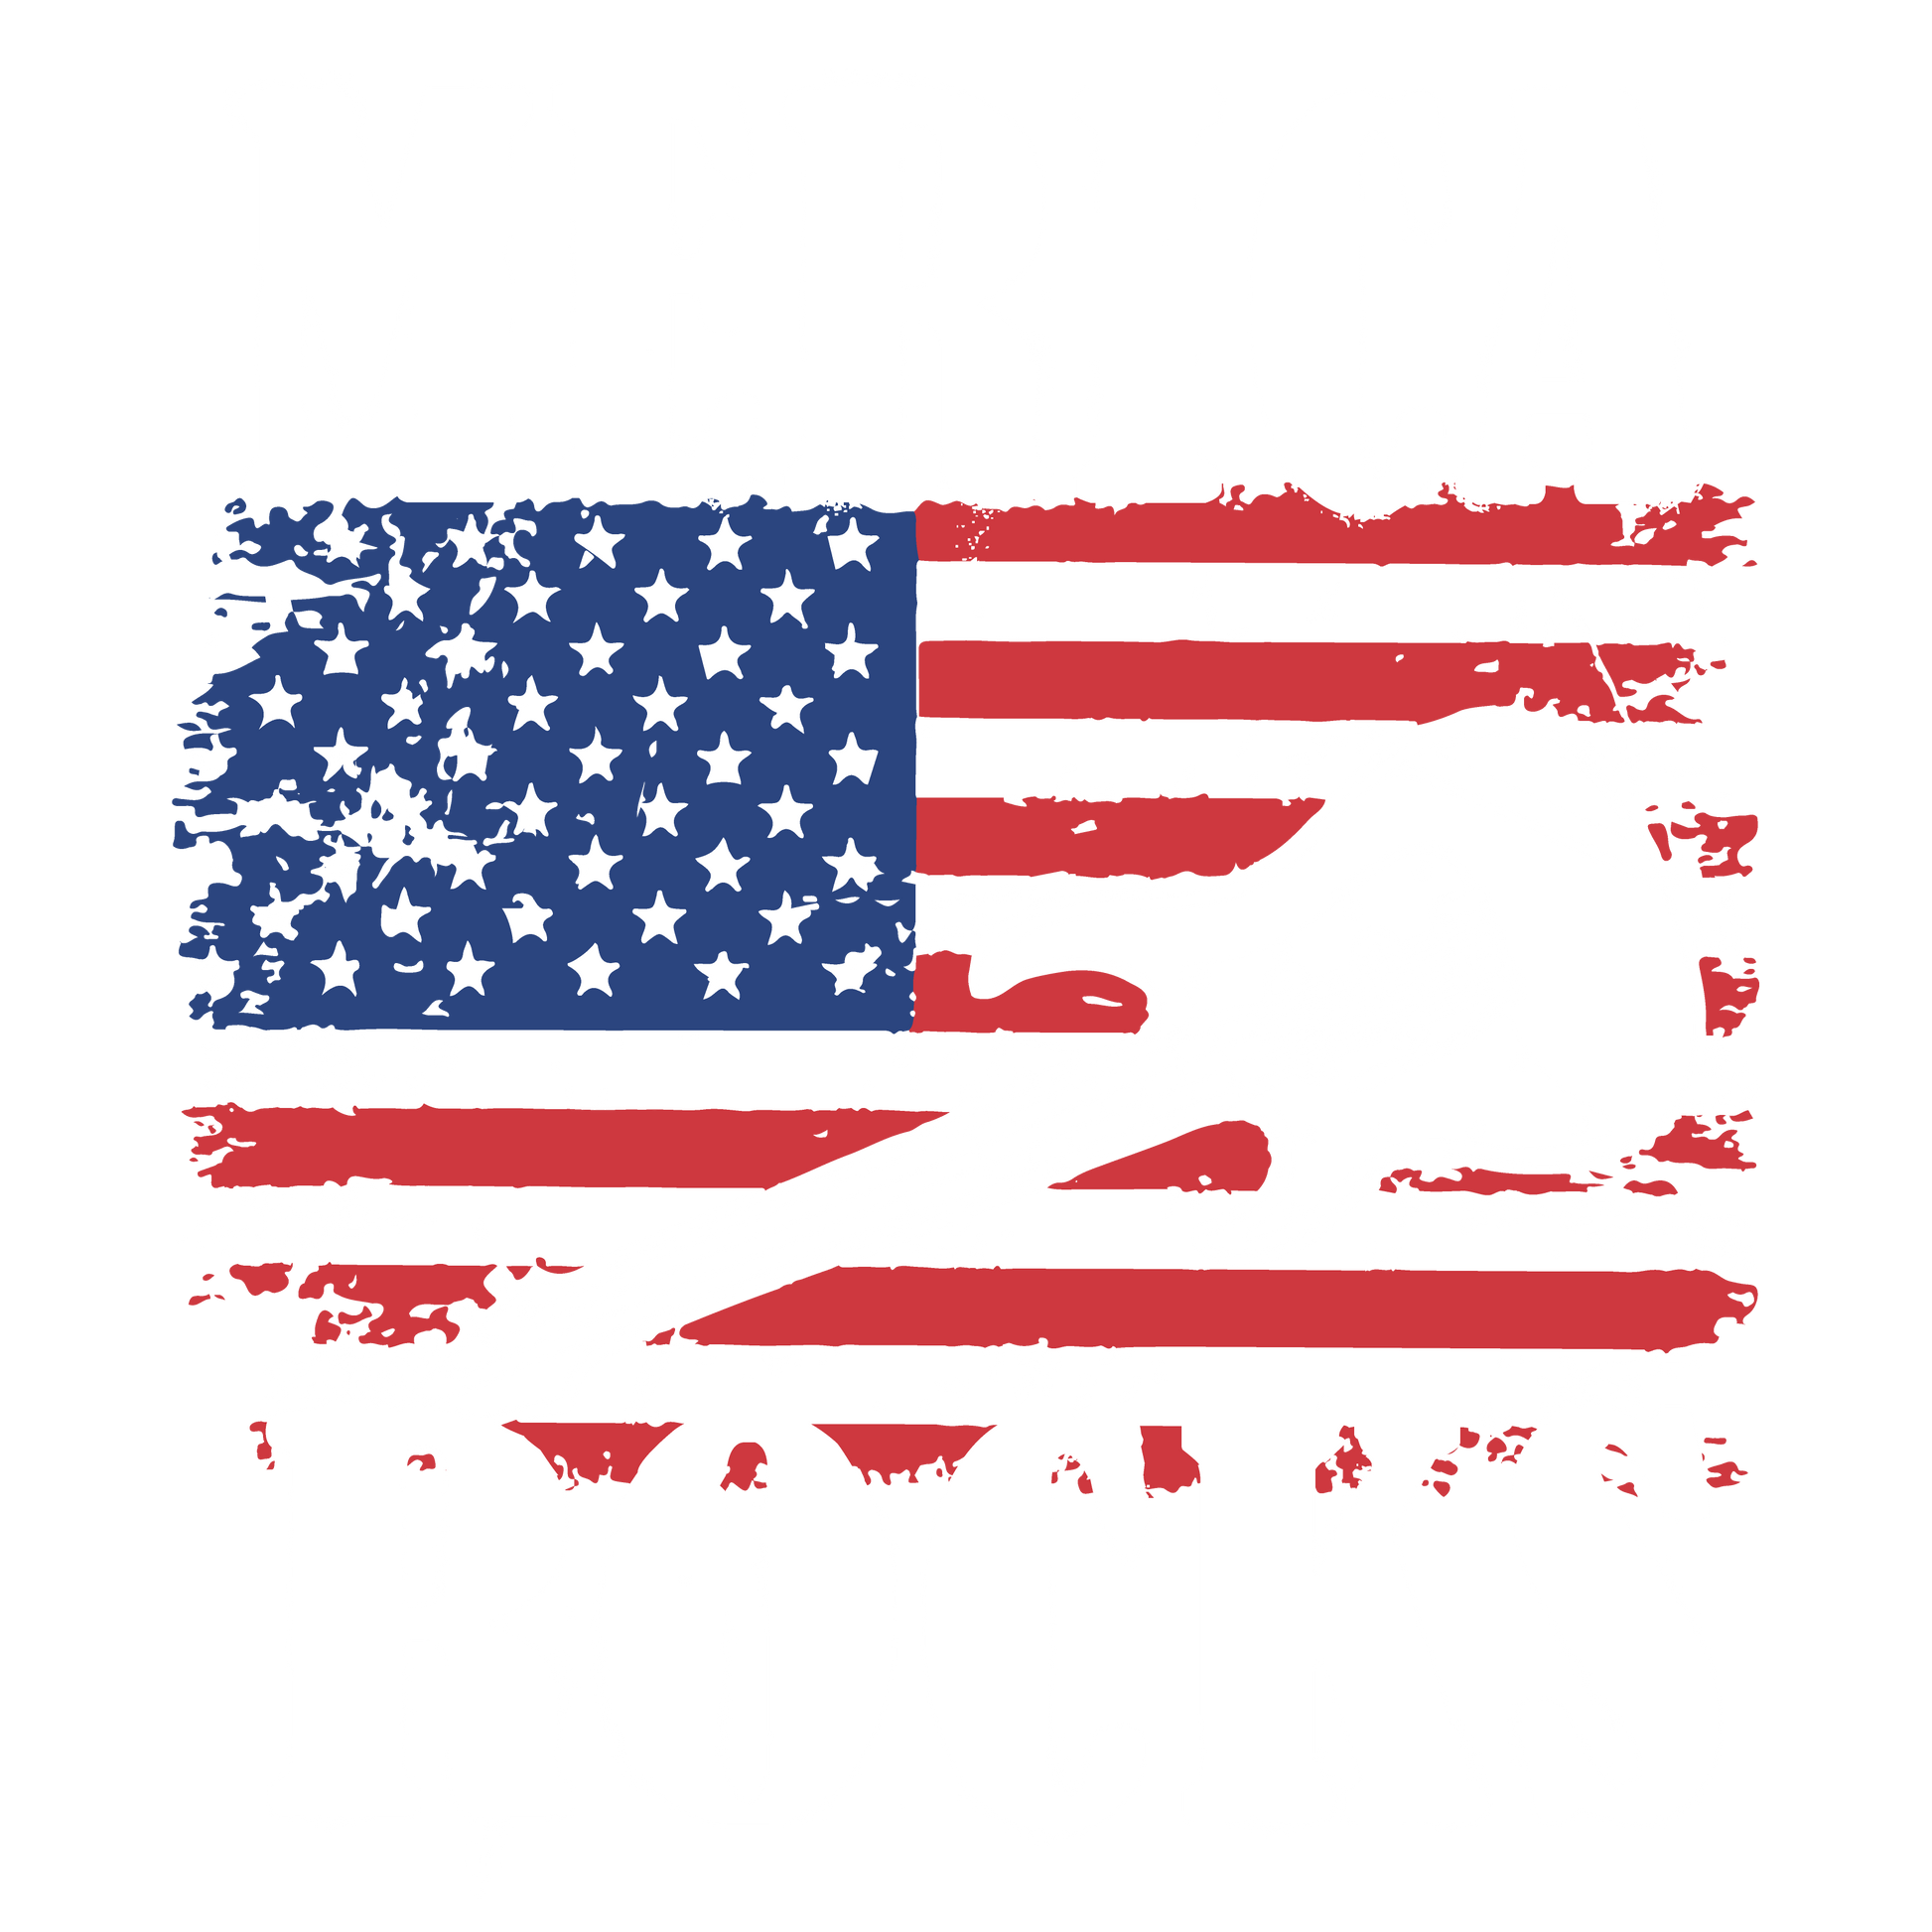 Funny T-Shirts design "Merica Rocks Tee"